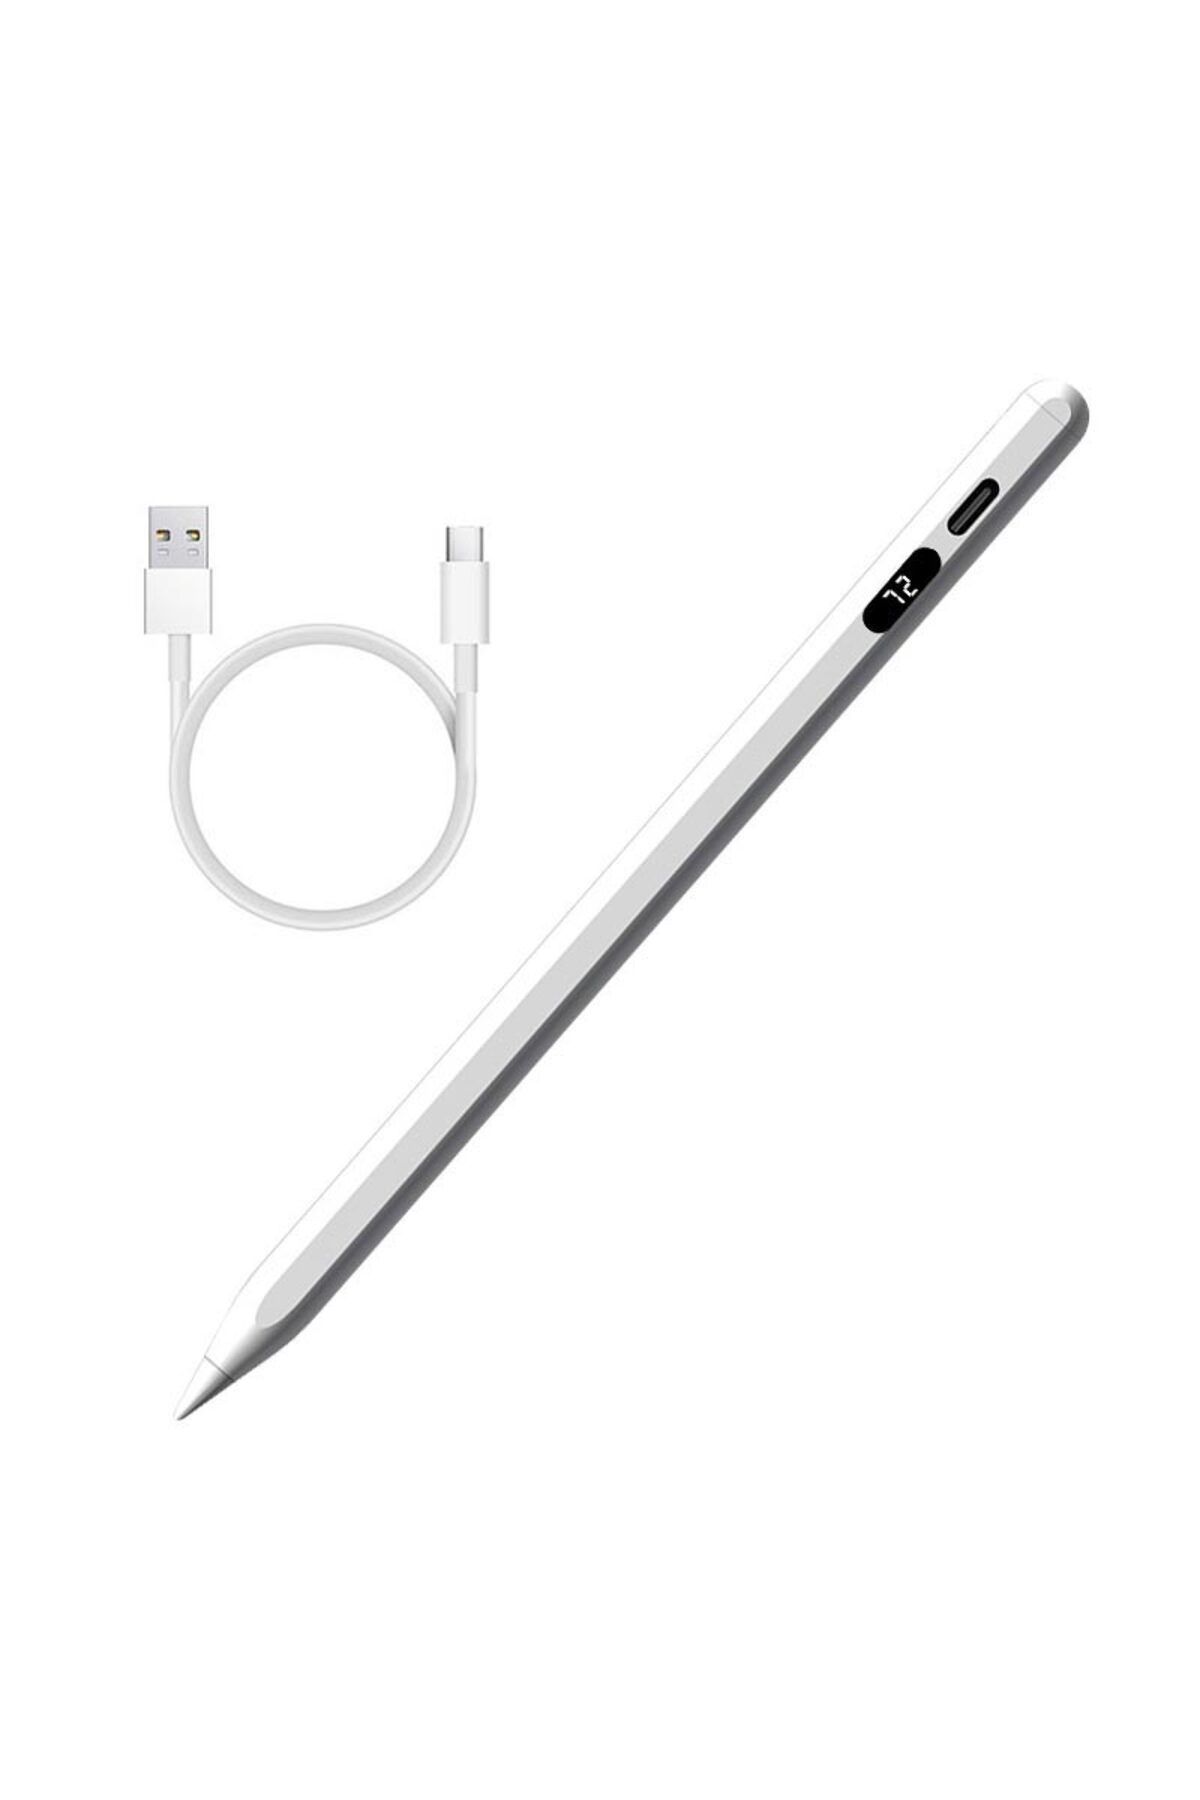 Apera NR45 Alüminyum Kasa Şarjlı Tablet Kalemi iOS iPad Mini Air Pro Dijital Ekranlı Mıknatıslı